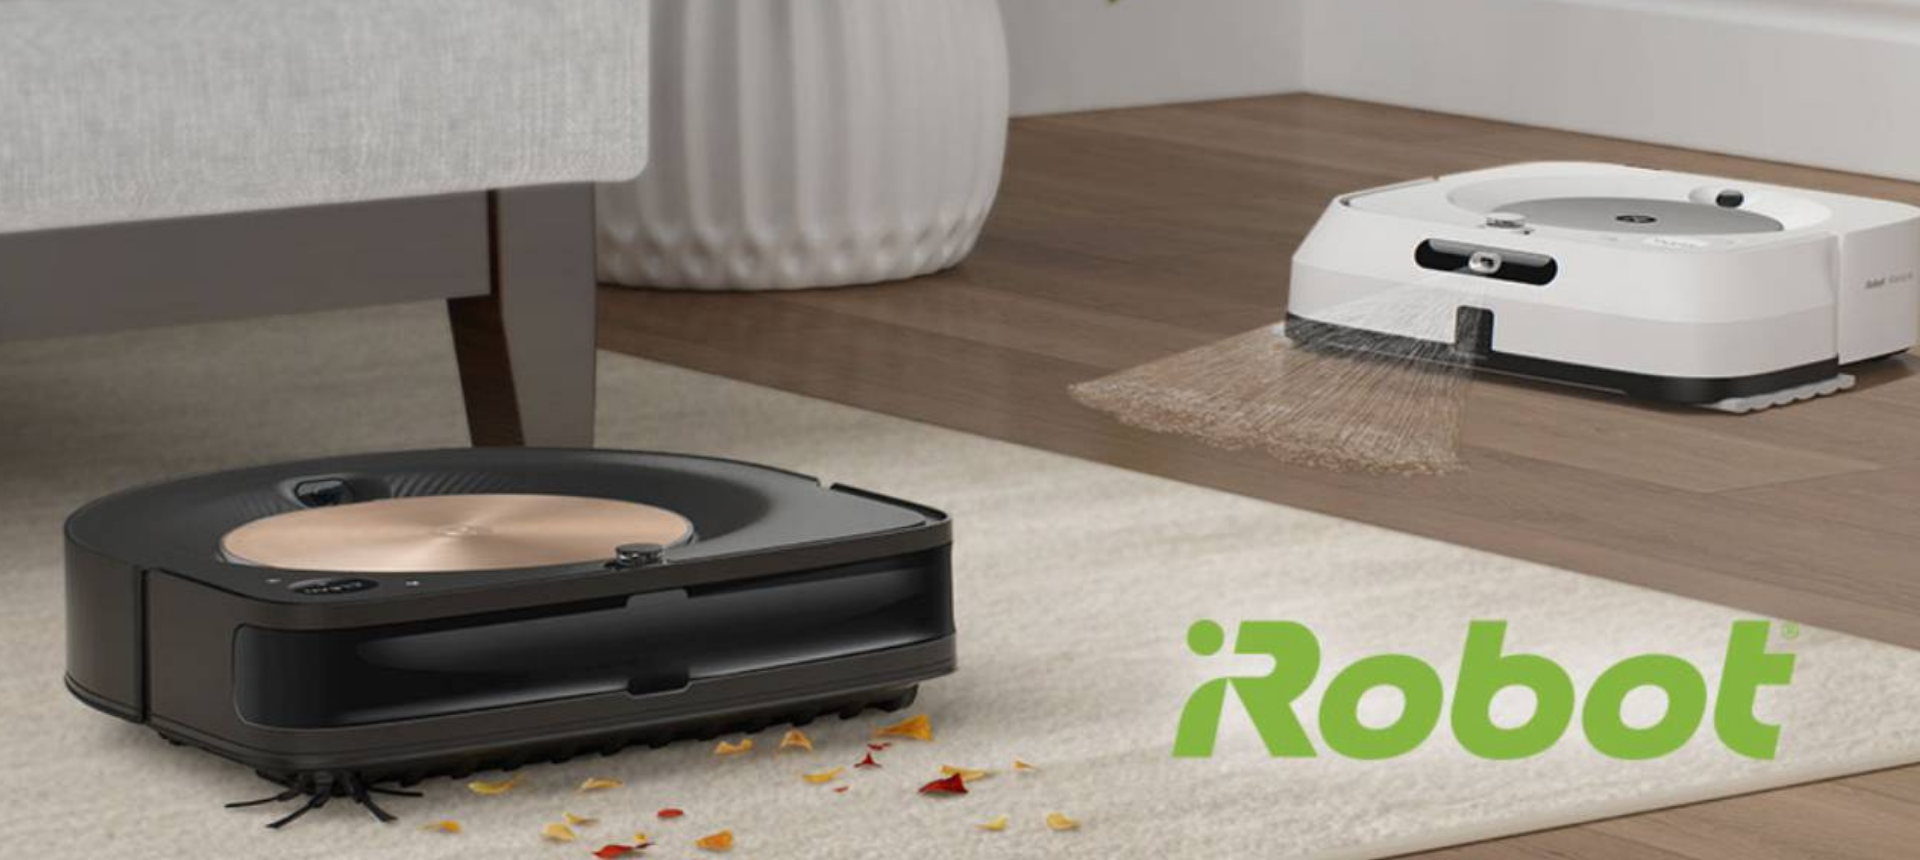 Best Irobot Roomba Robot Vacuums, Best Irobot For Laminate Floors